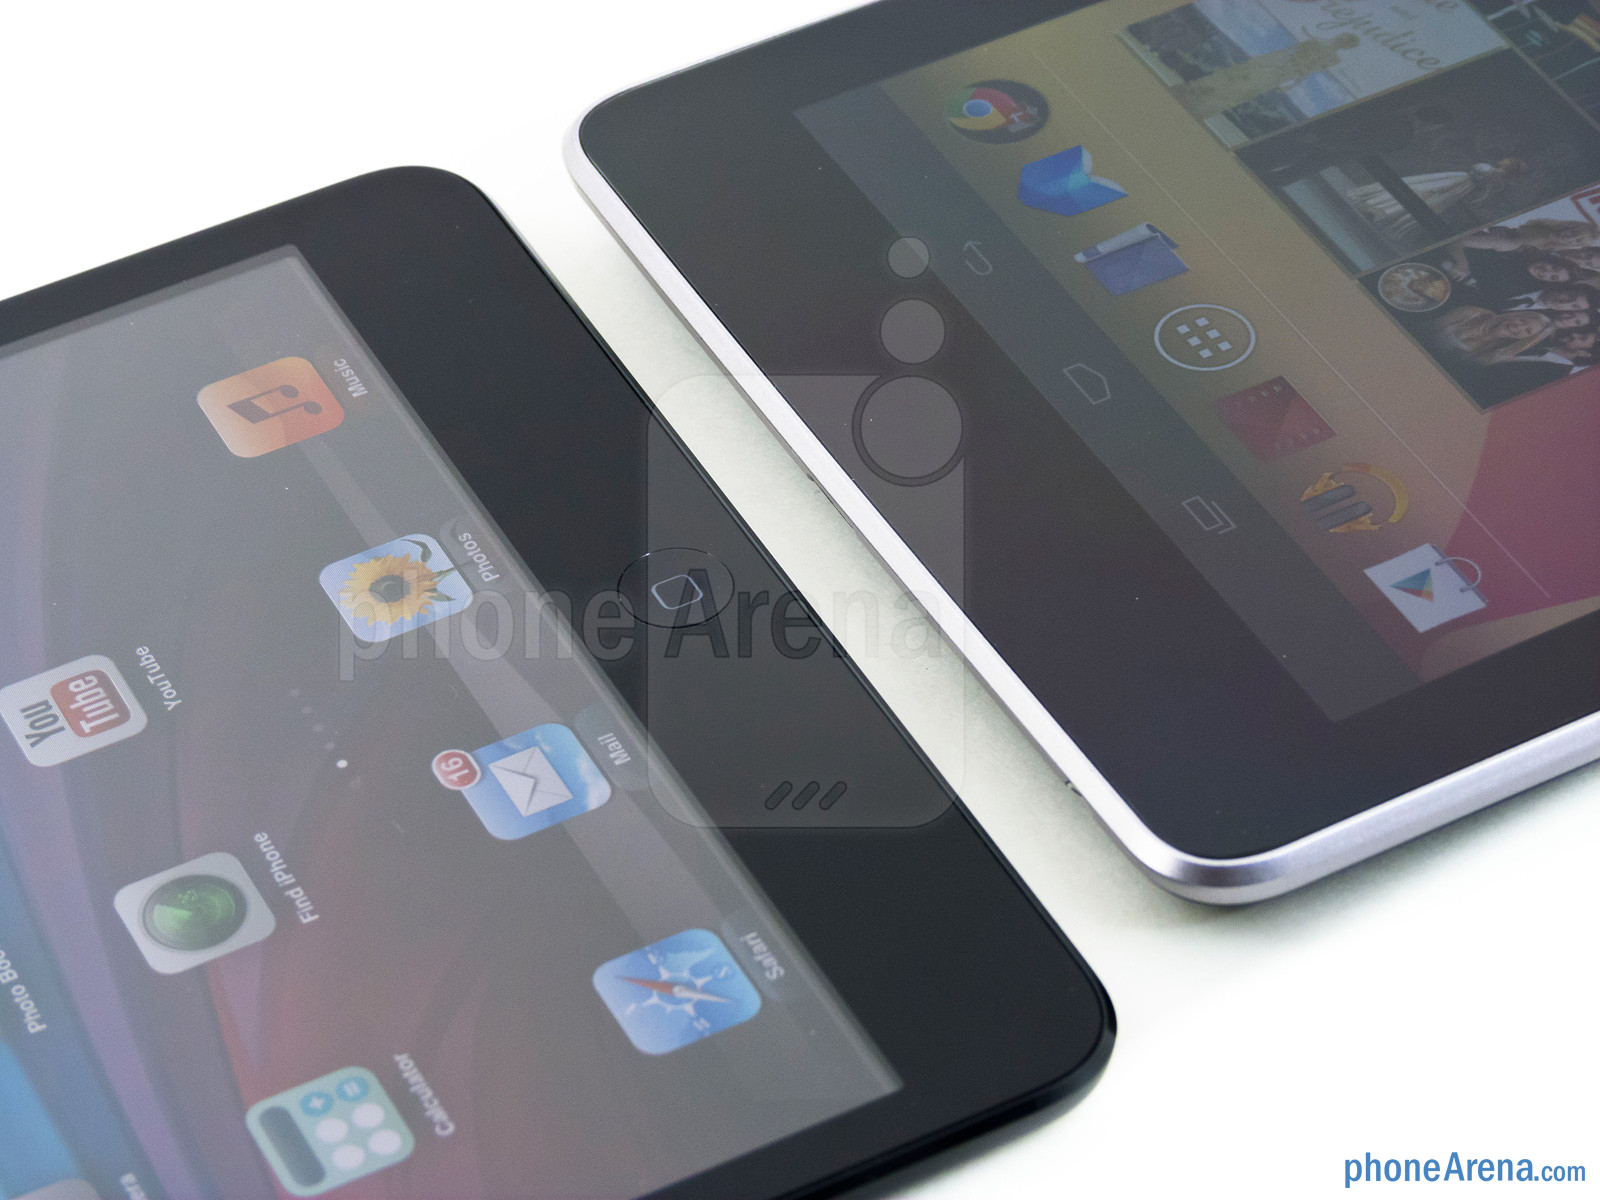 So sánh Apple iPad mini và Google Nexus 7 3